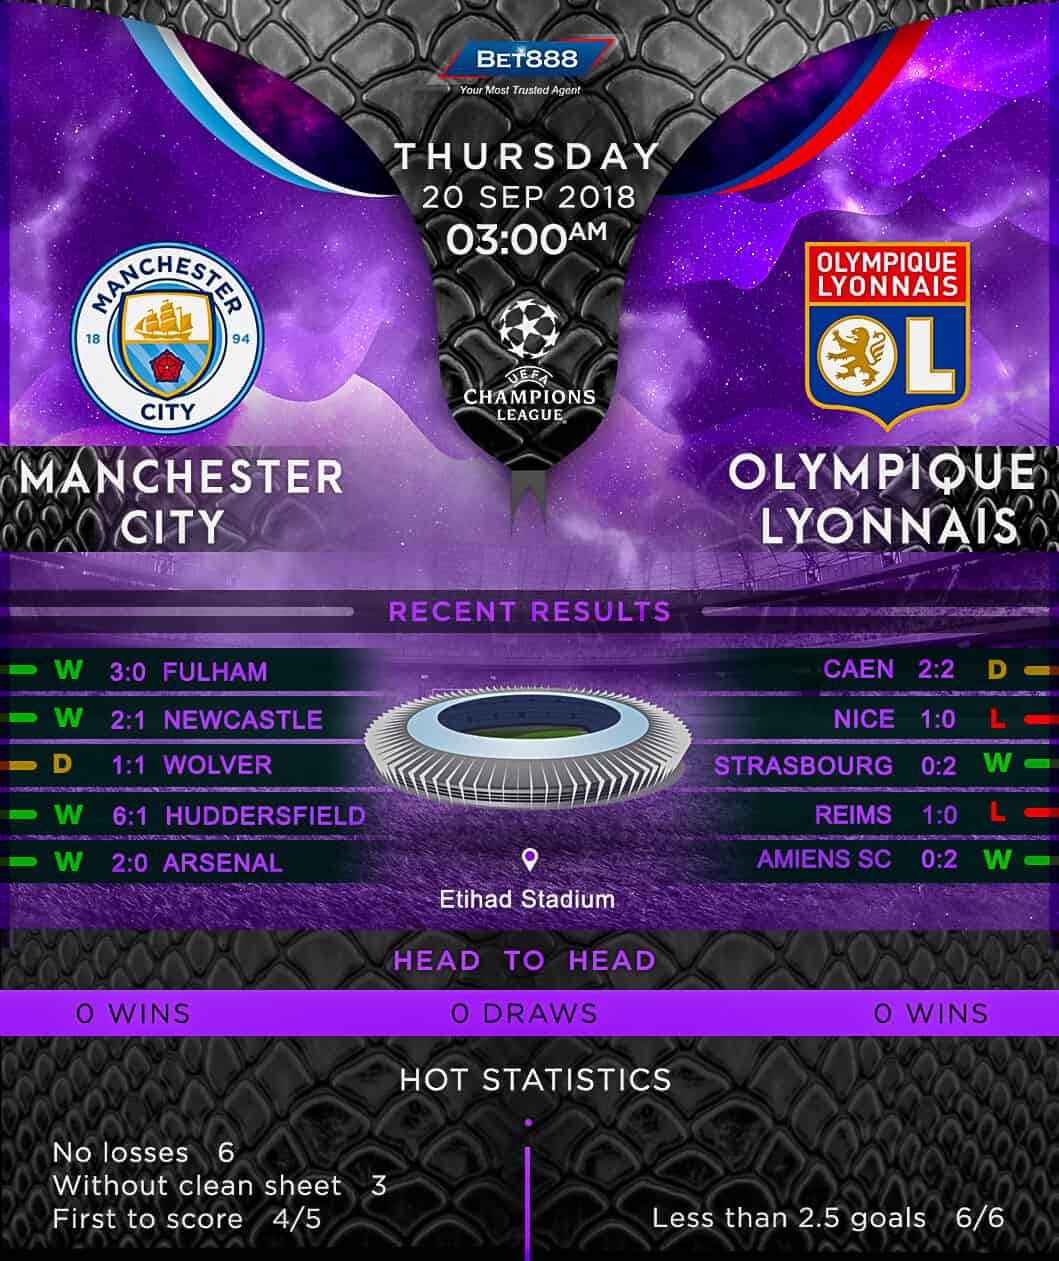 Manchester City vs Olympique Lyonnais 20/09/18